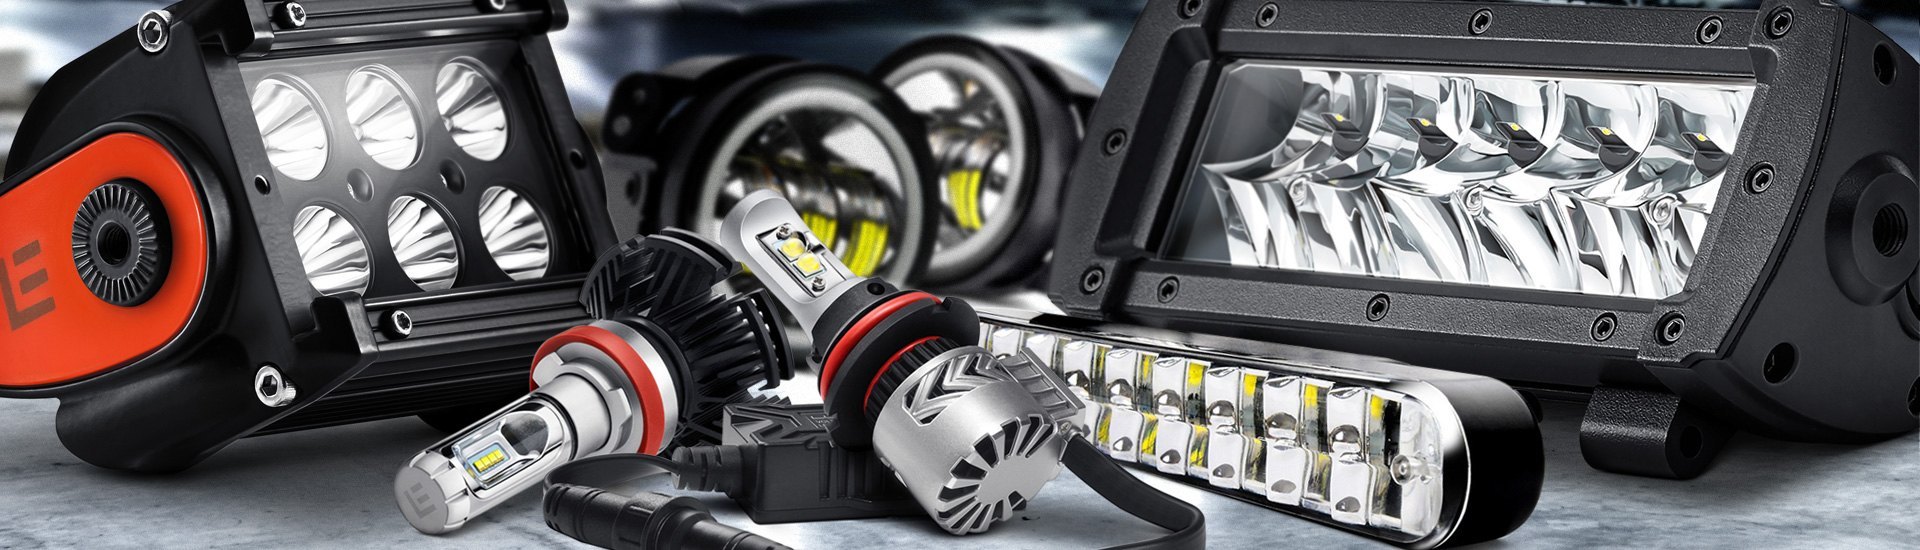 Automotive LED Lights | Bars, Strips, Halos, Bulbs, Custom Light Kits 1